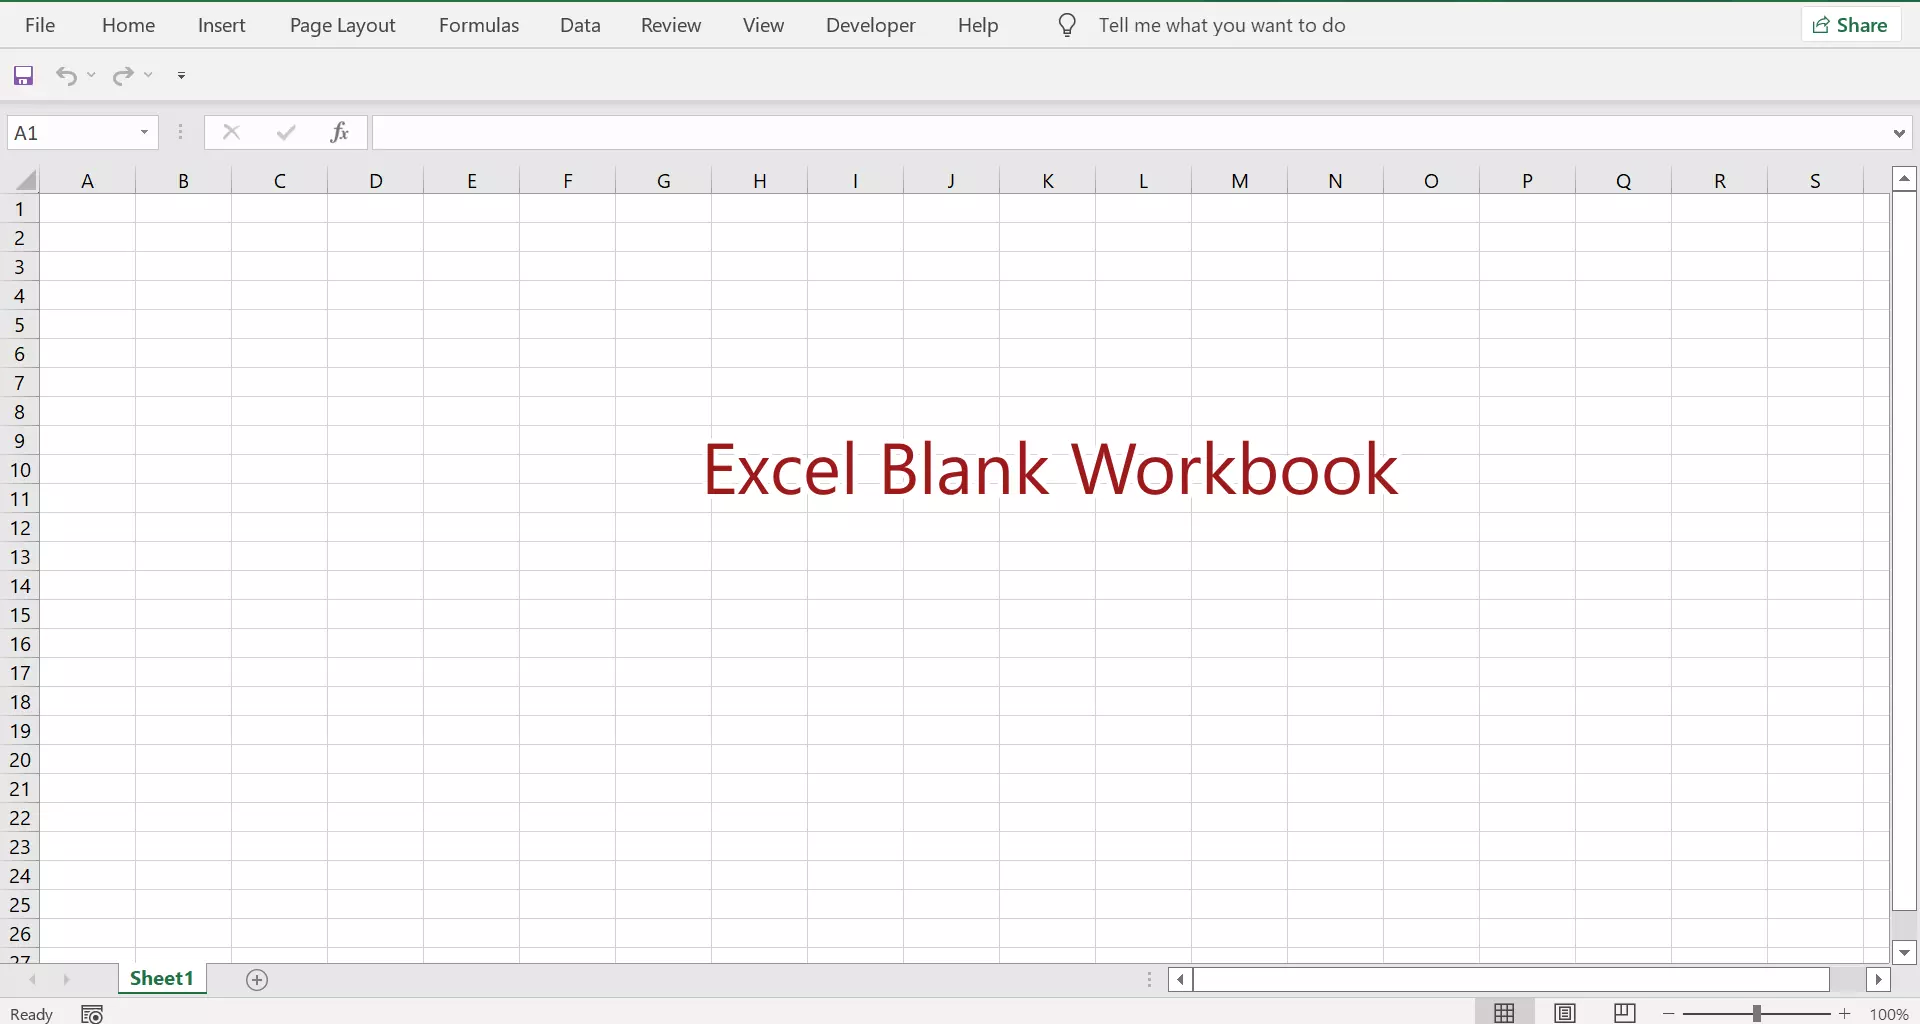 Excel Blank Workbook